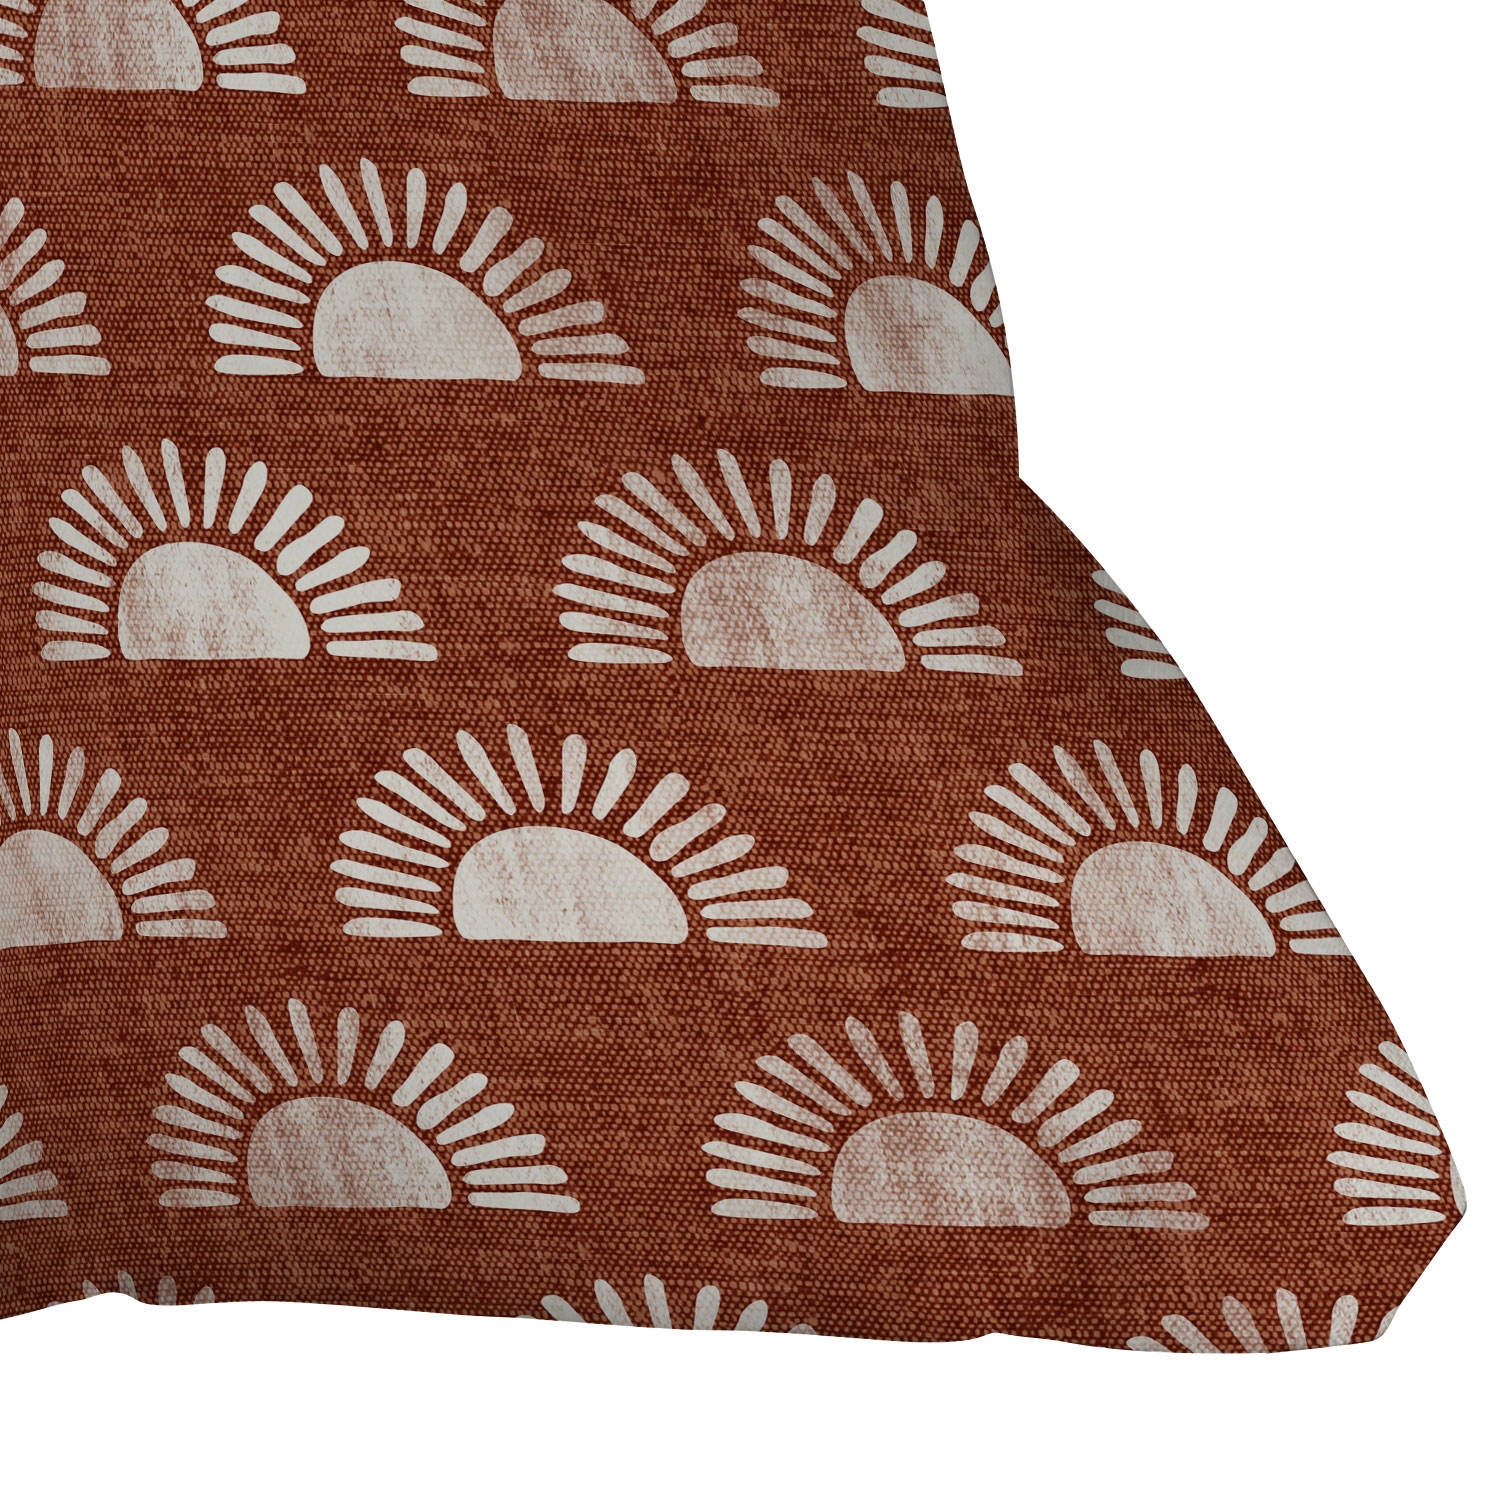 Block Print Suns On Rust by Little Arrow Design Co - Outdoor Throw Pillow 26" x 26" - Image 2